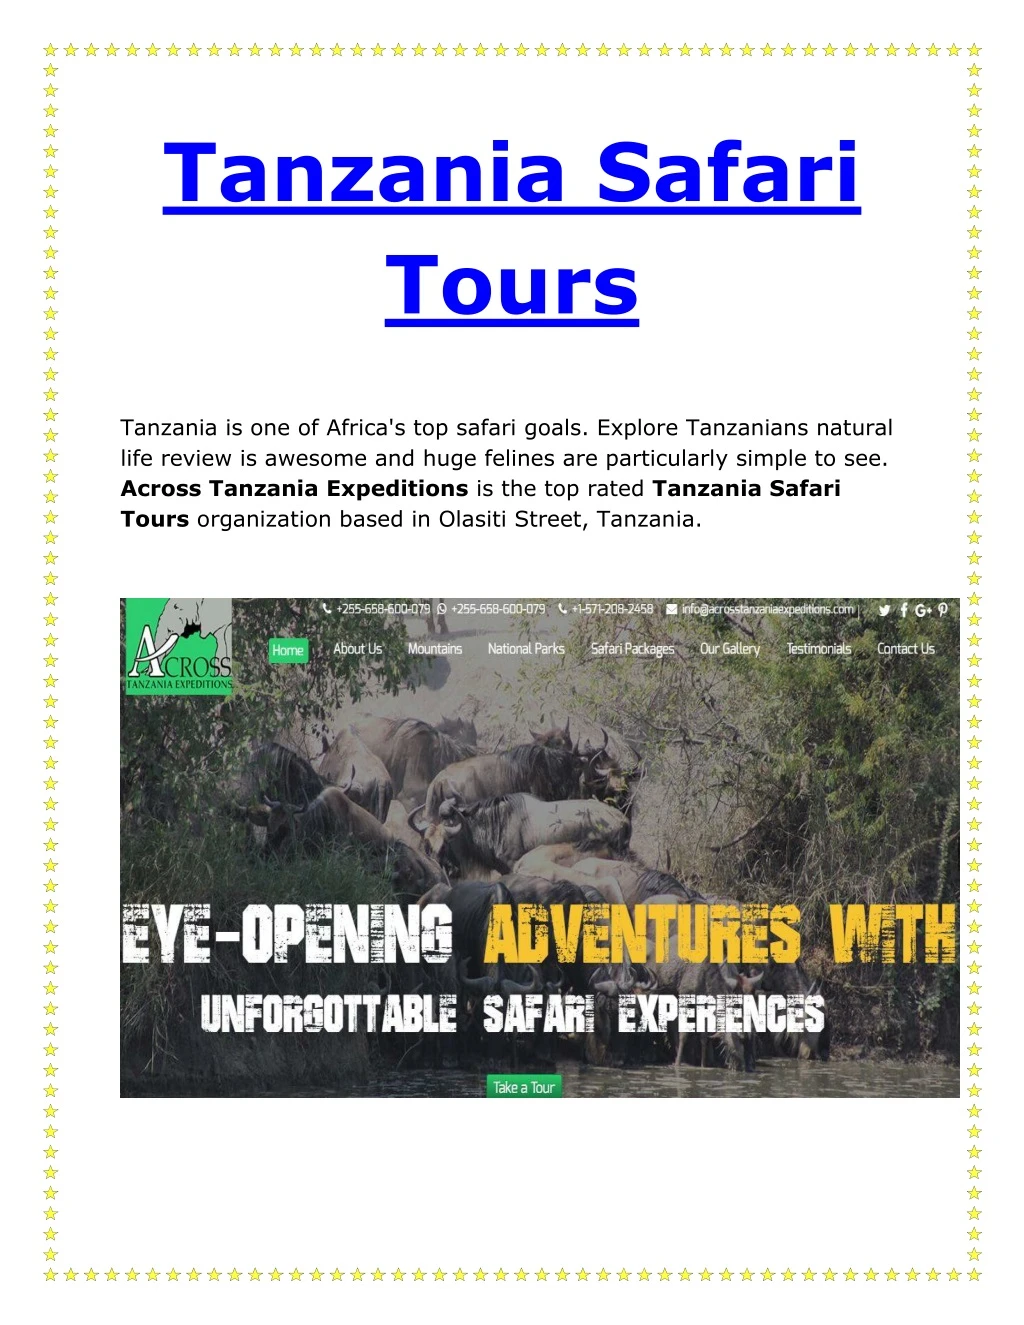 tanzania safari tours